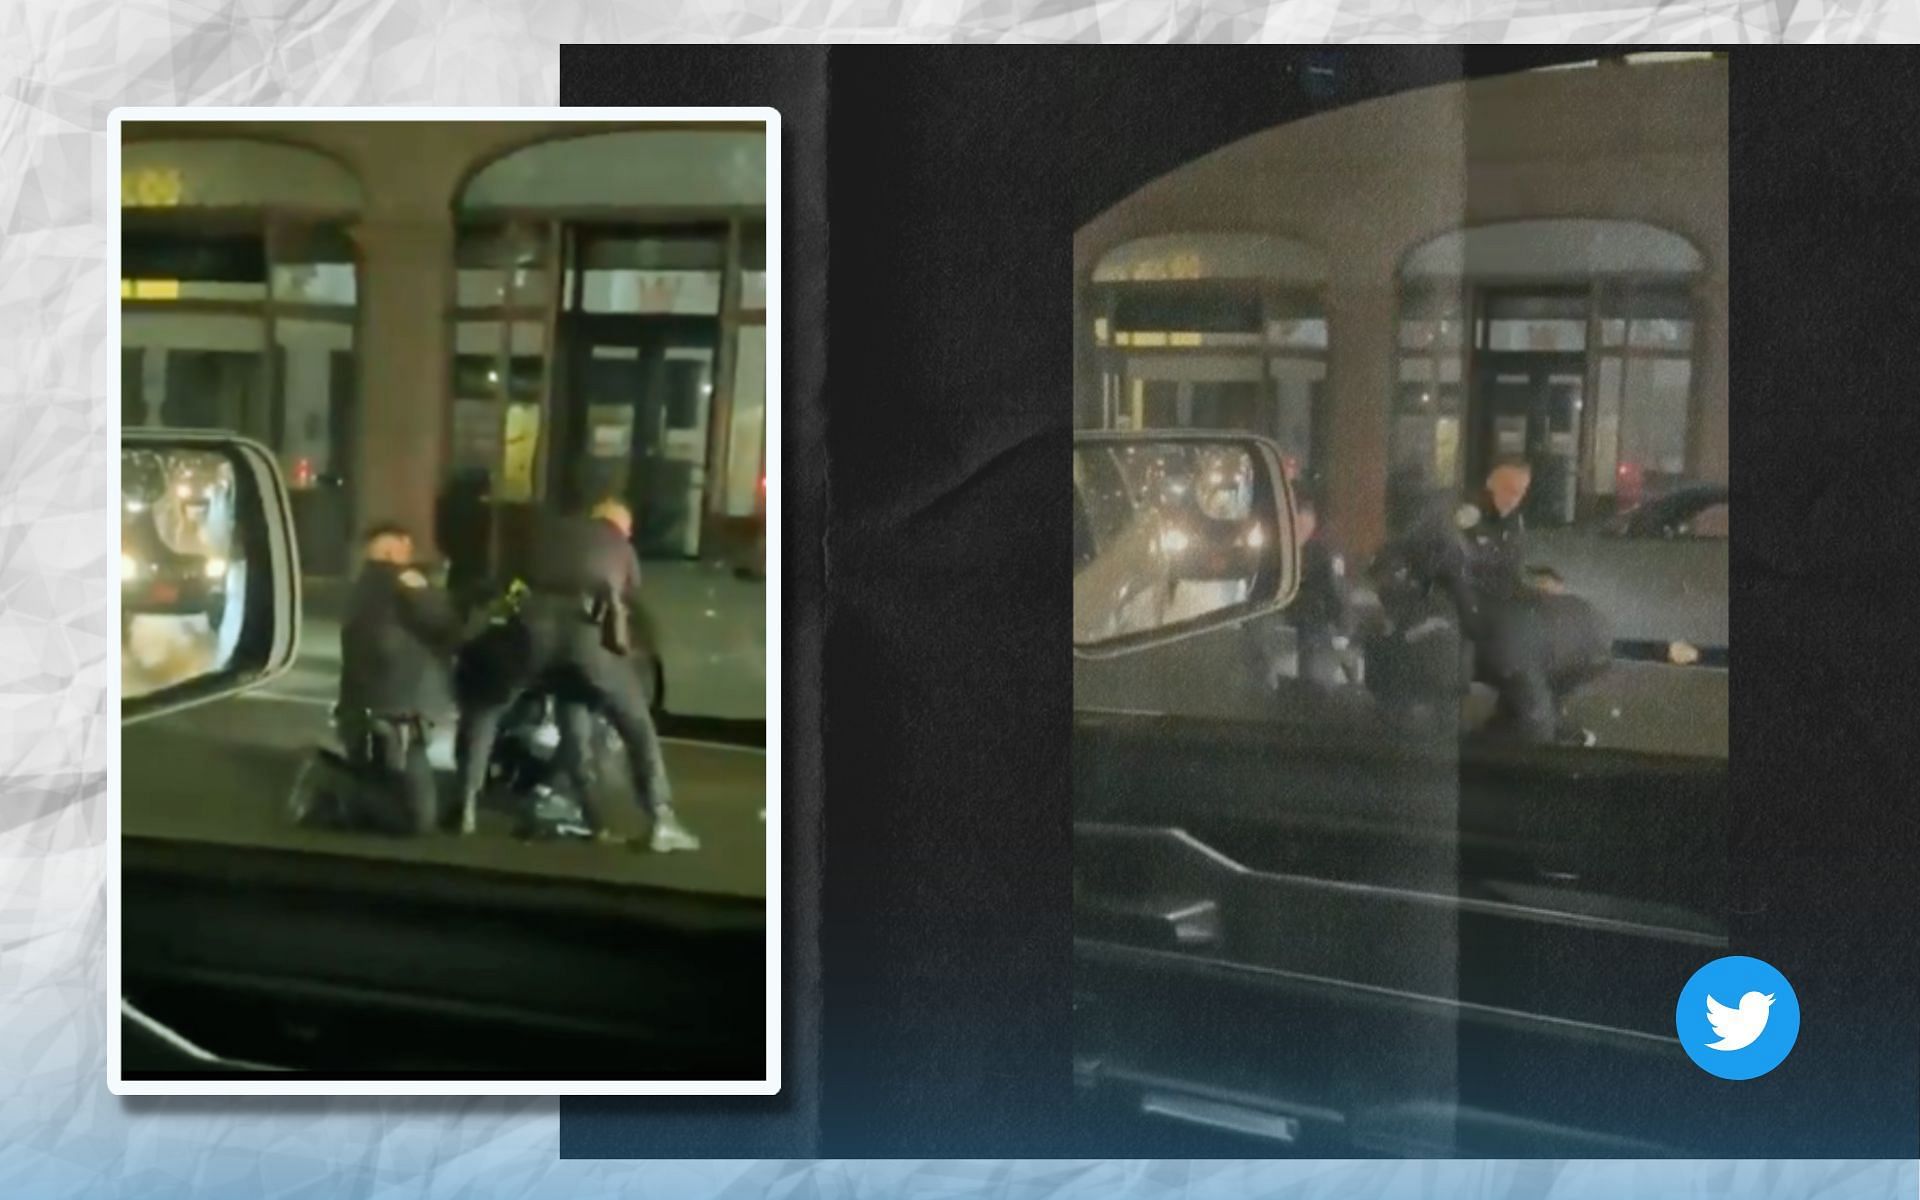 Kelvin Gastelum reacts to clip of 3 officers struggling to apprehend a man. [Image credits; @KelvinGastelum on Twitter]